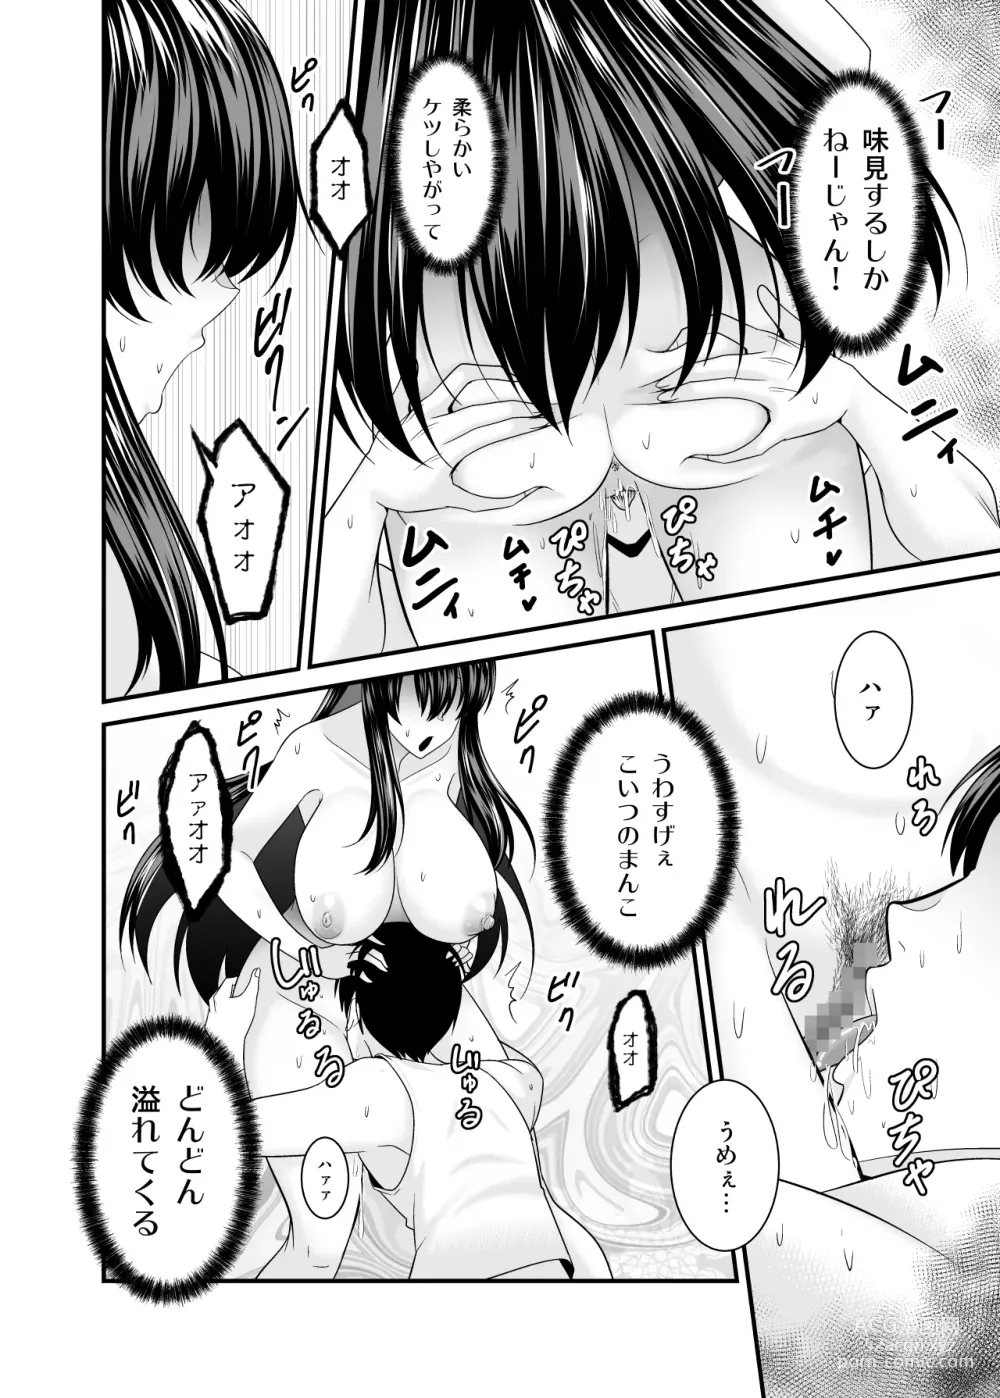 Page 25 of doujinshi ヤバい事故物件に女幽霊が出たけど無職底辺の俺はセックスしまくる